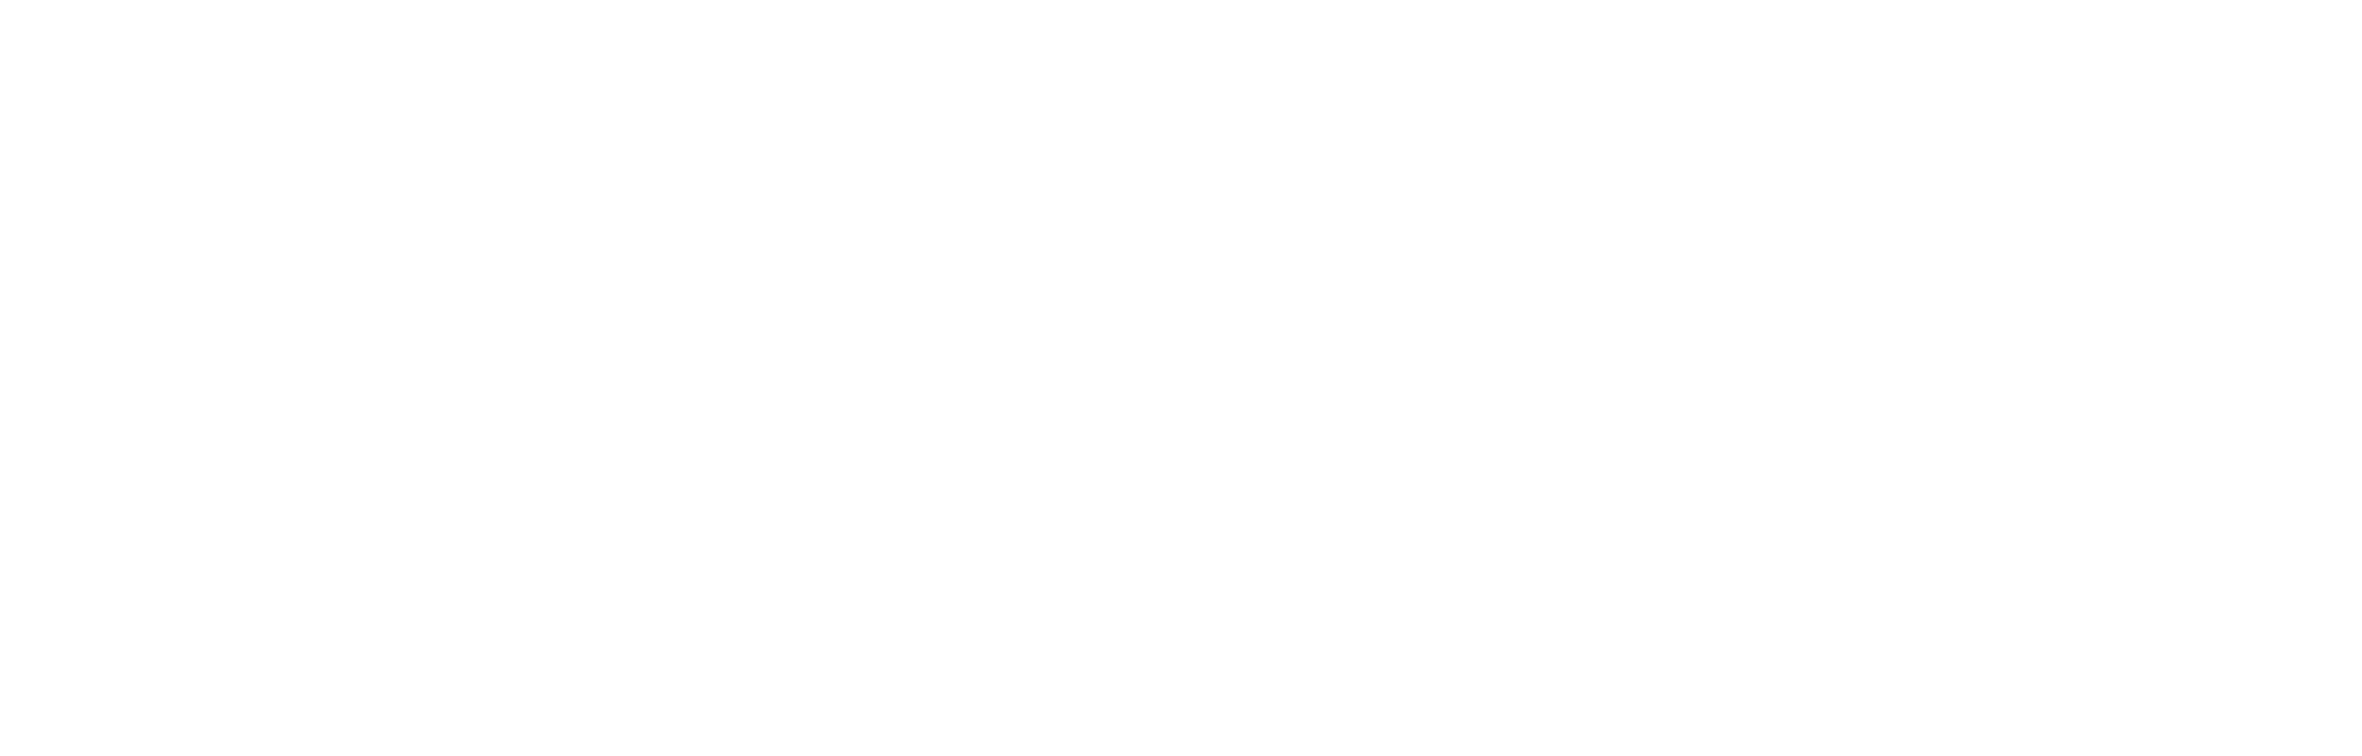 Gebert Ruef Stiftung Innobooster